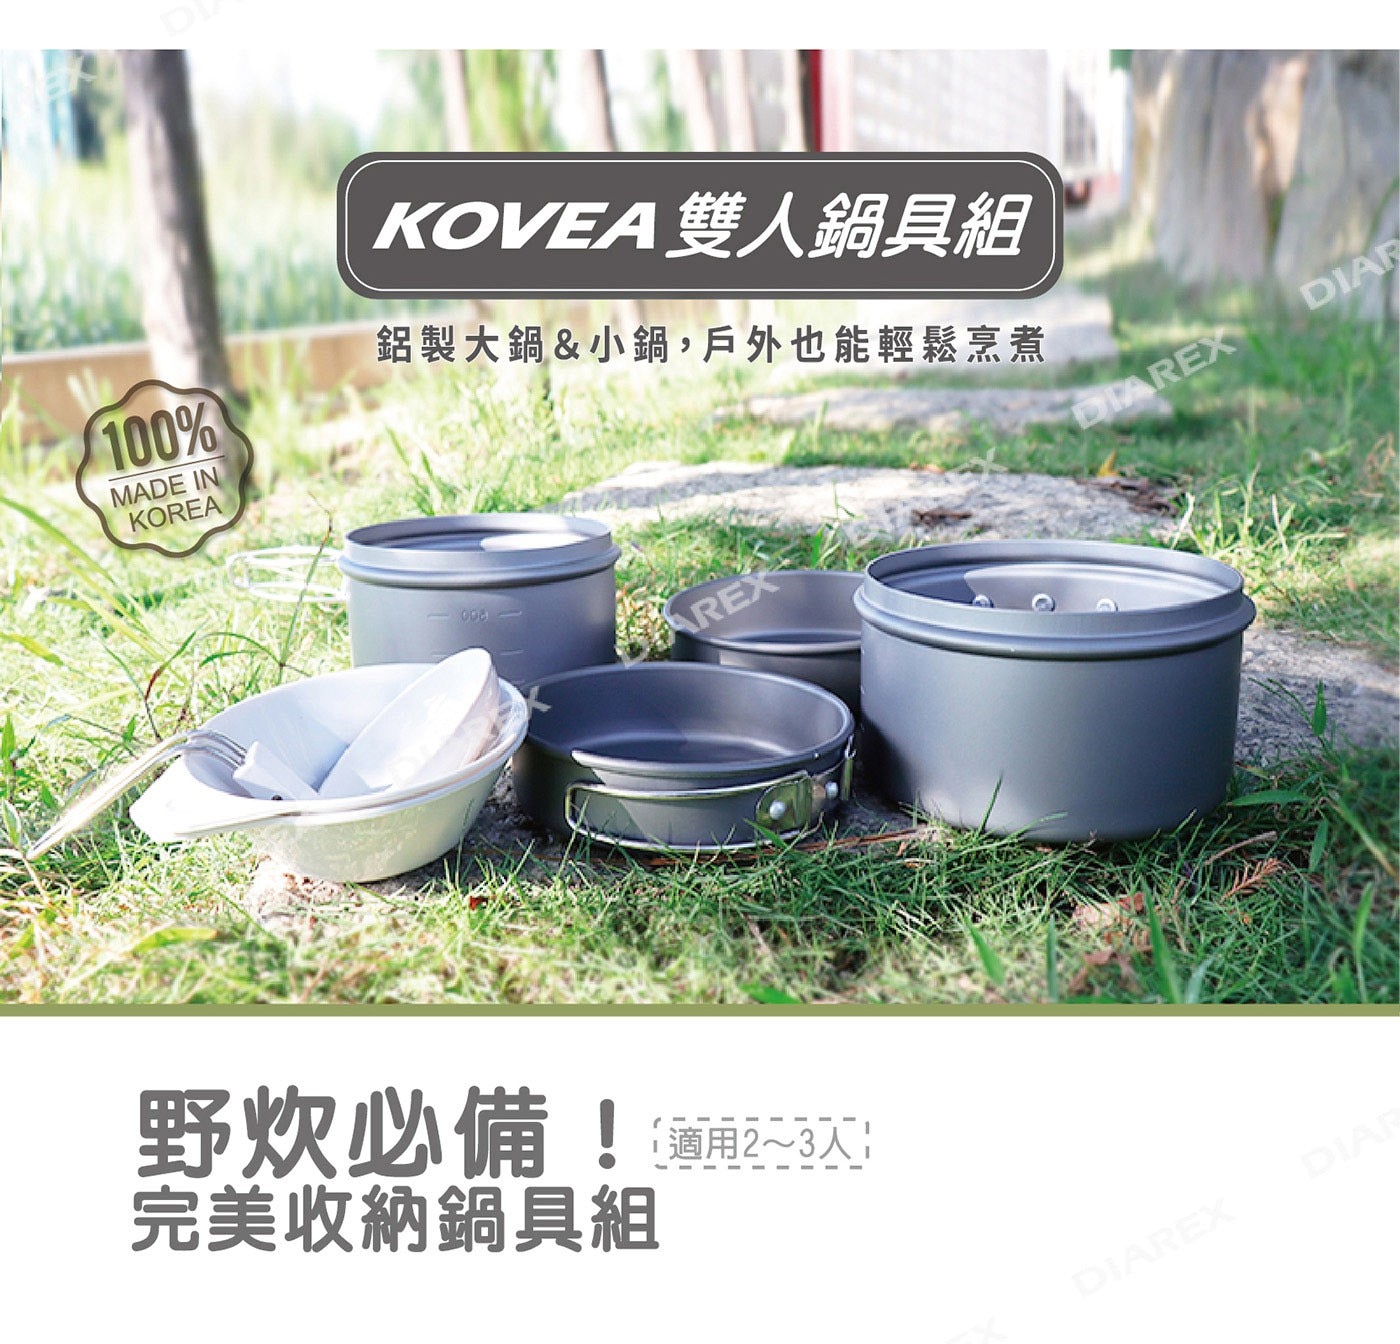 KOVEA 雙人鍋具組，高純度鋁合金製造，不沾塗處理，經久耐用、容易清洗，折疊式輕巧手把，易握易收，附收納網袋。